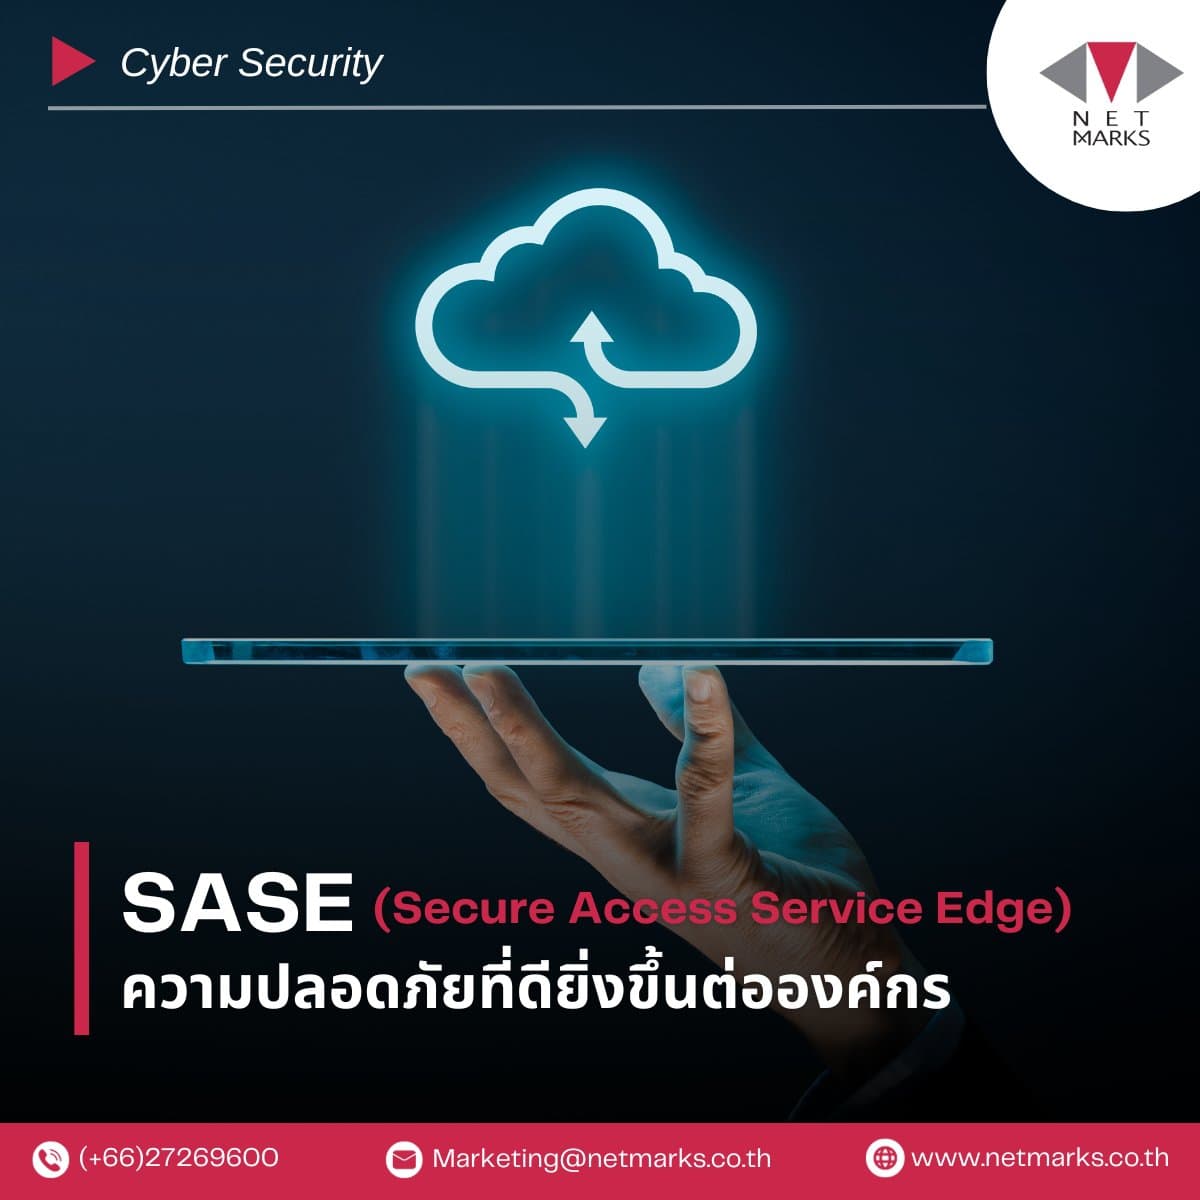 SASE จึงเป็นอีกทางเลือกสำหรับการรักษาความปลอดภัยสำหรับข้อมูลของเราใน Cloud แต่ก่อนอื่นที่จะพูดถึงความสำคัญ เรามาทำความรู้จักกับ SASE กันก่อนดีกว่าค่ะ